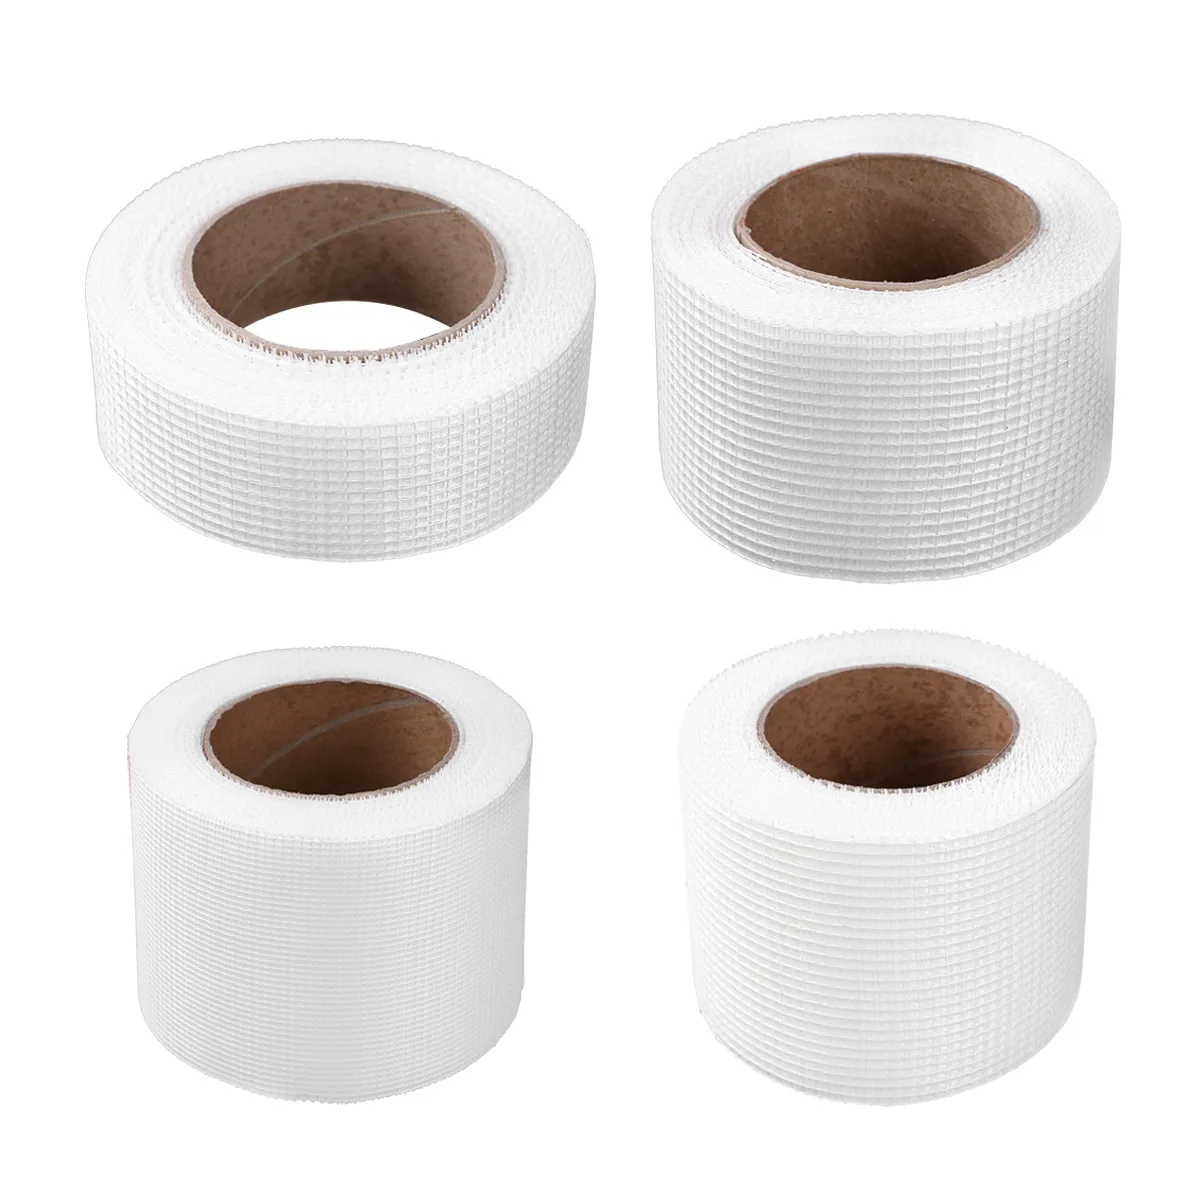 Autoadhesivos cinta adhesiva-tejidos banda banda tanques tela cinta aislante bandage